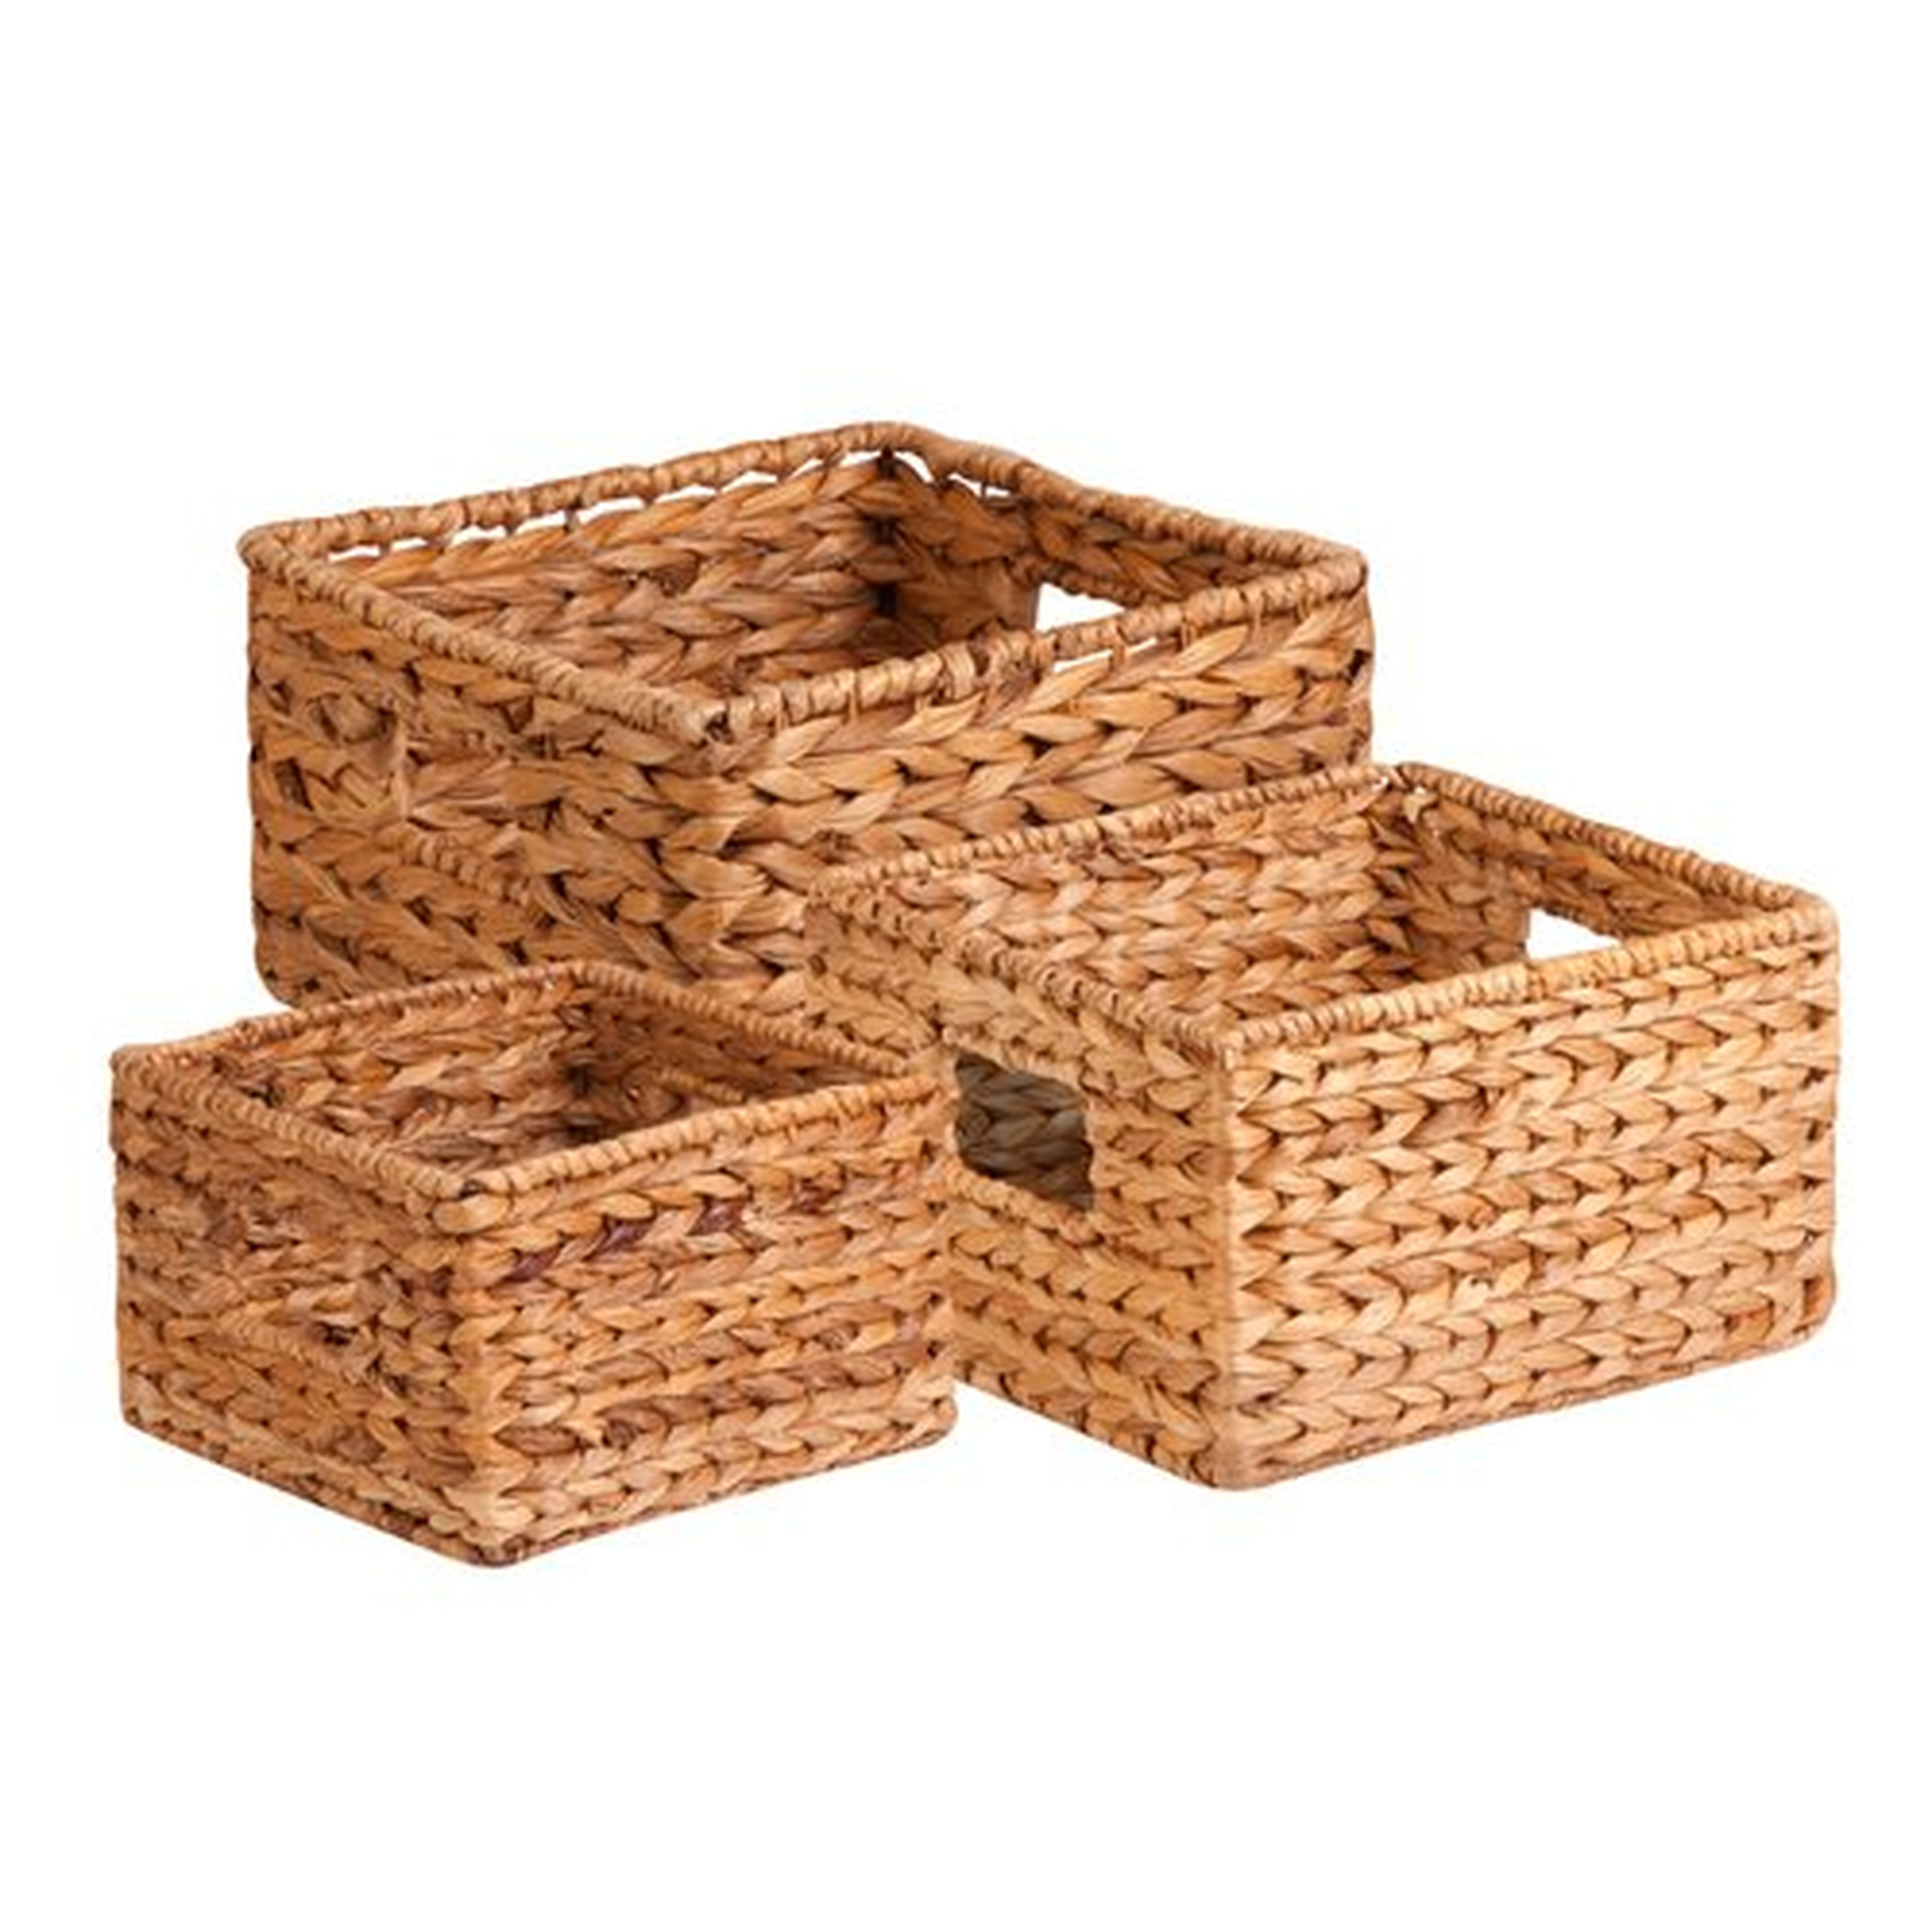 3 Piece Wicker/Rattan Basket Set - Wayfair